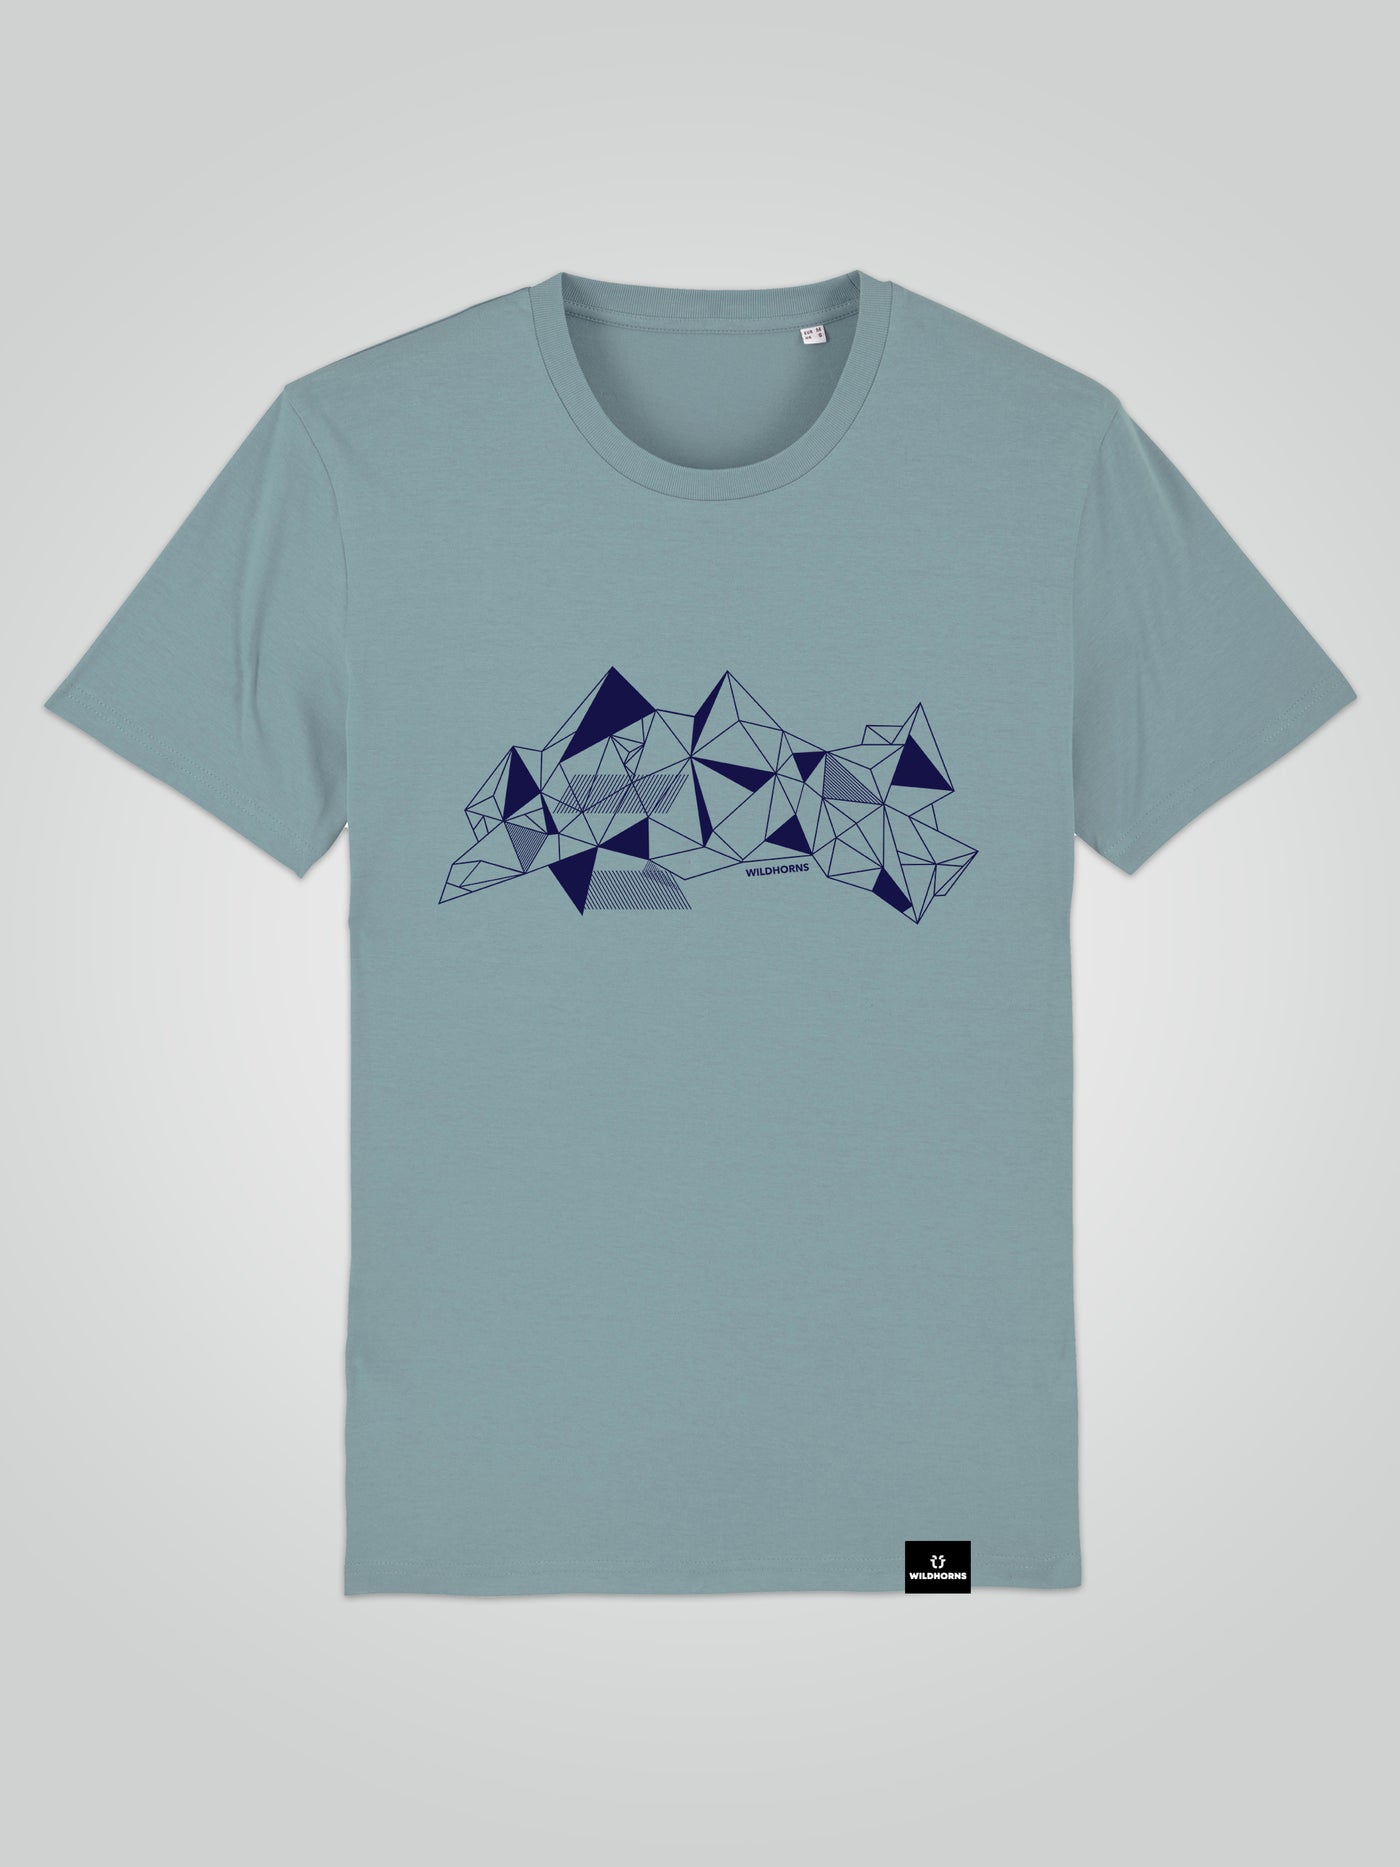 Geo Mountains - Unisex T-Shirt